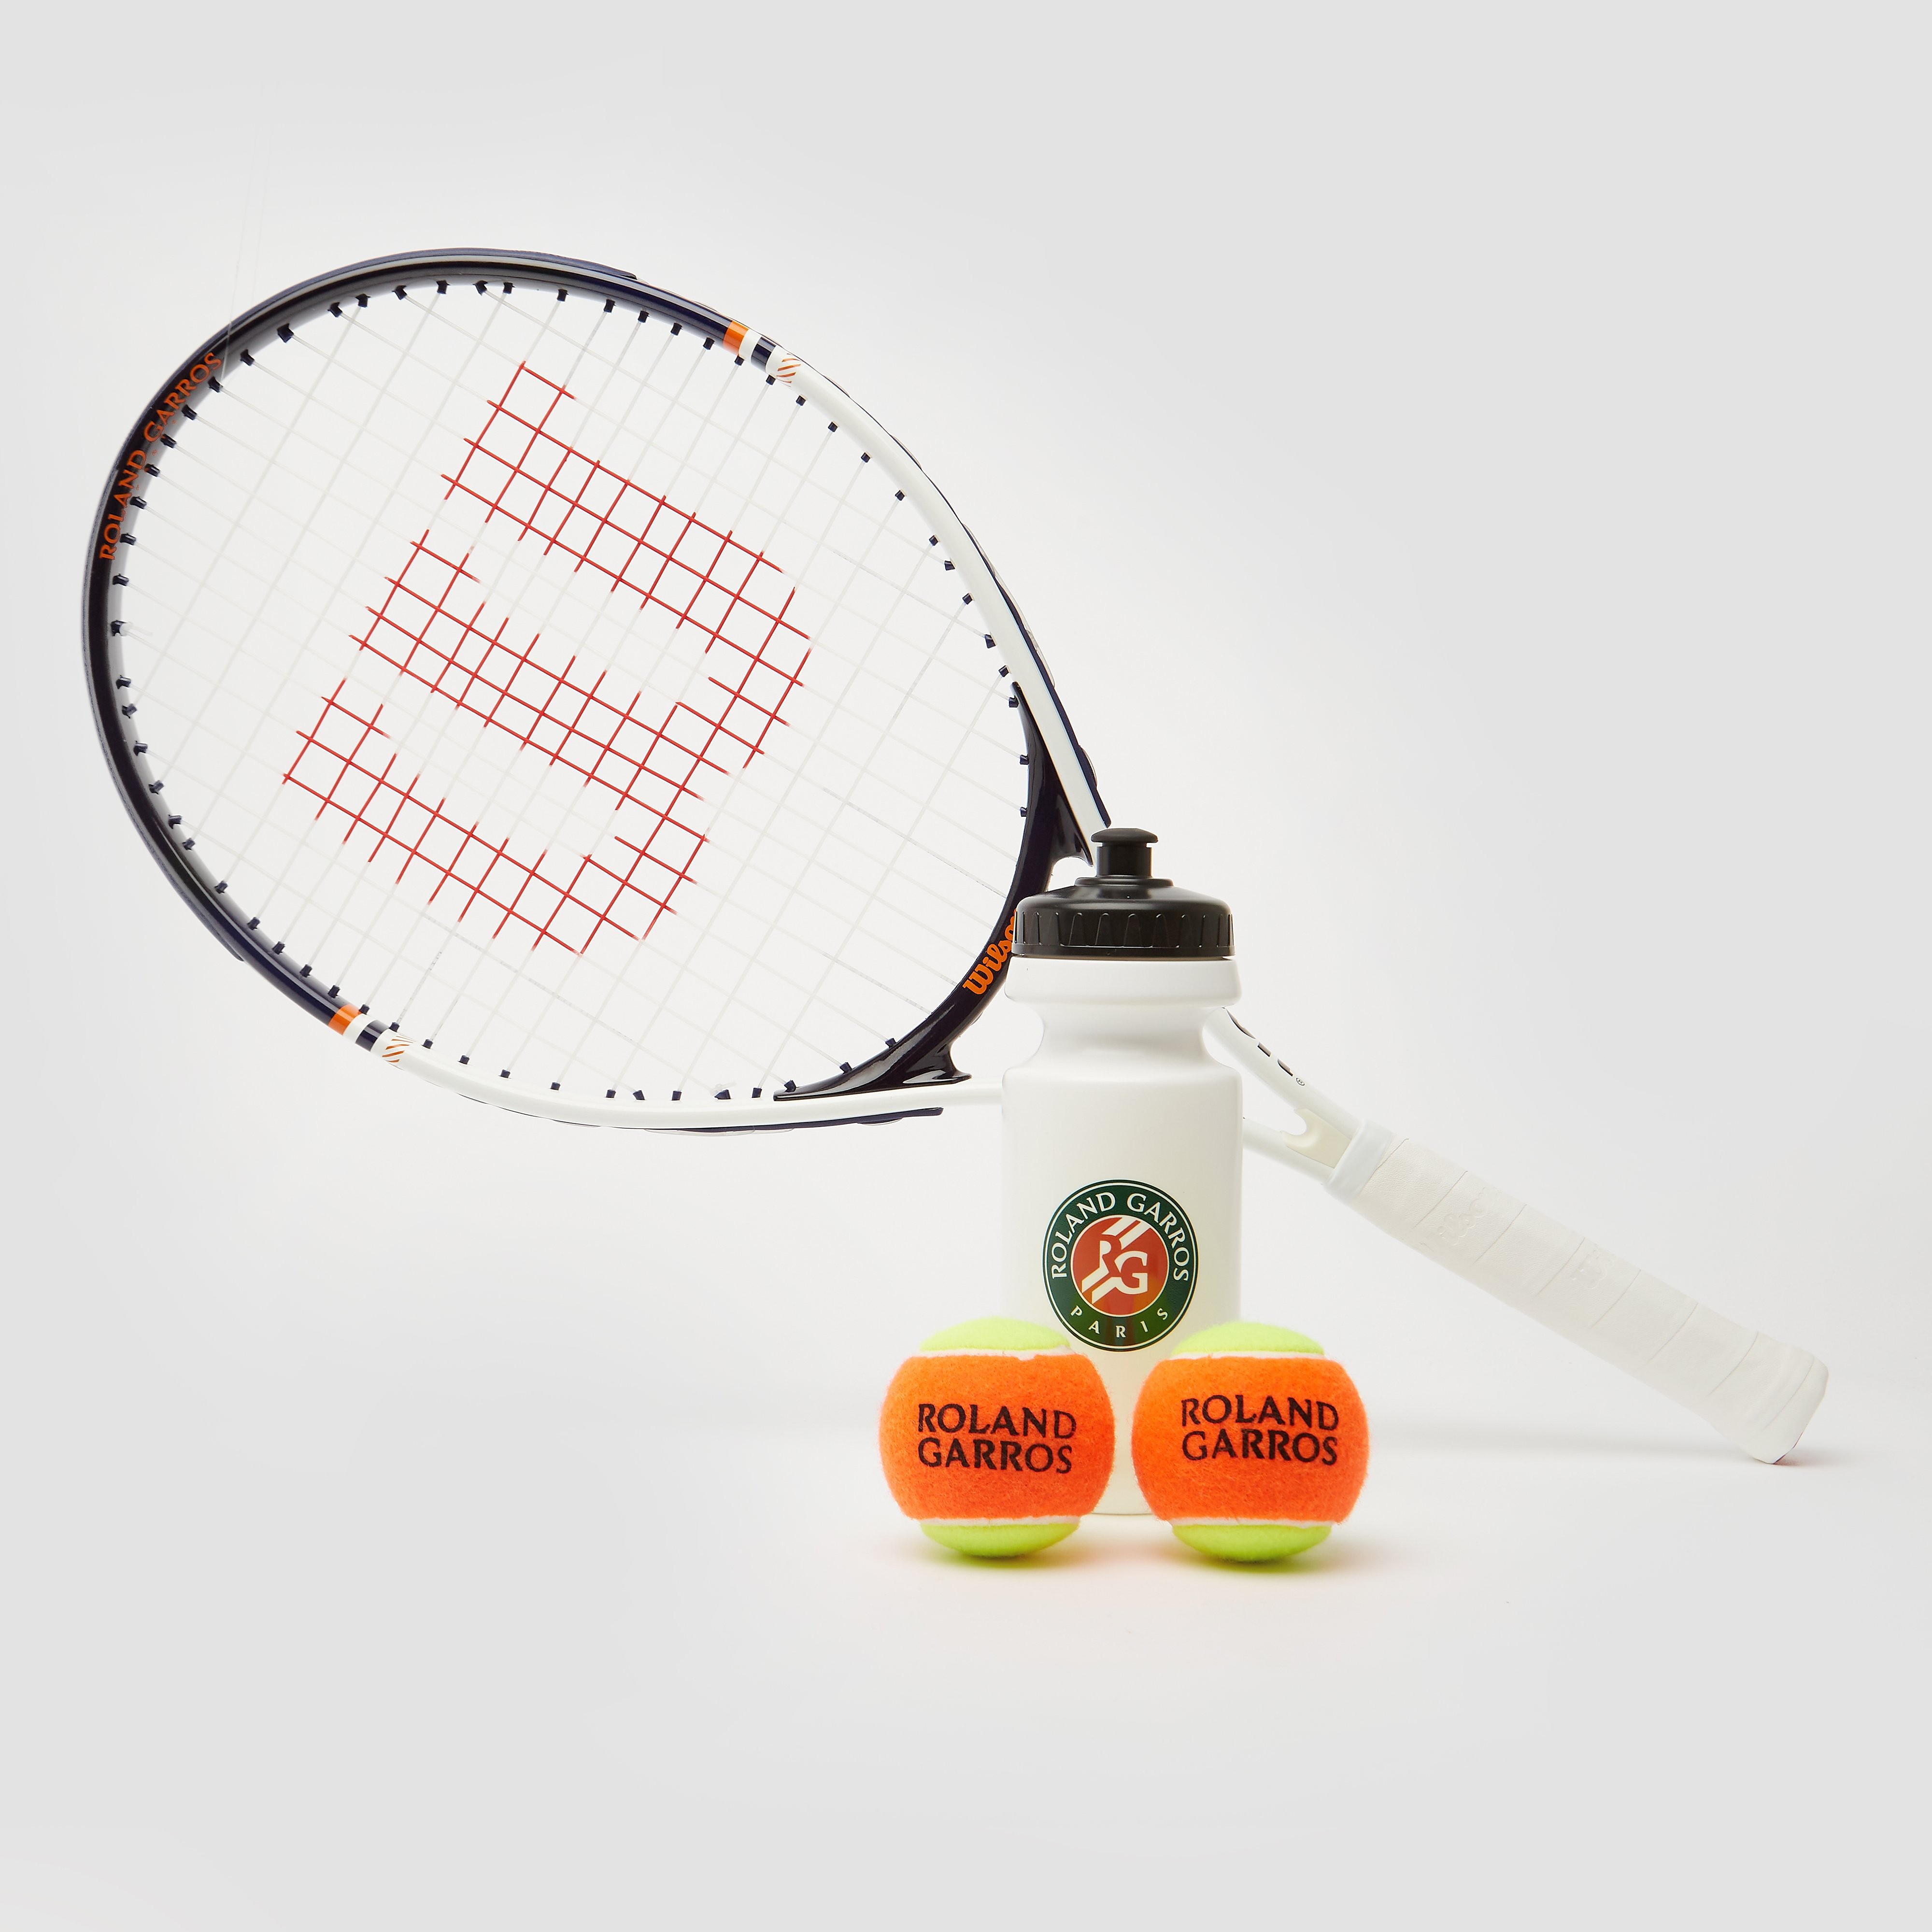 Wilson wilson roland garros kit 25 tennisracket tennisballen bidon wit oranje